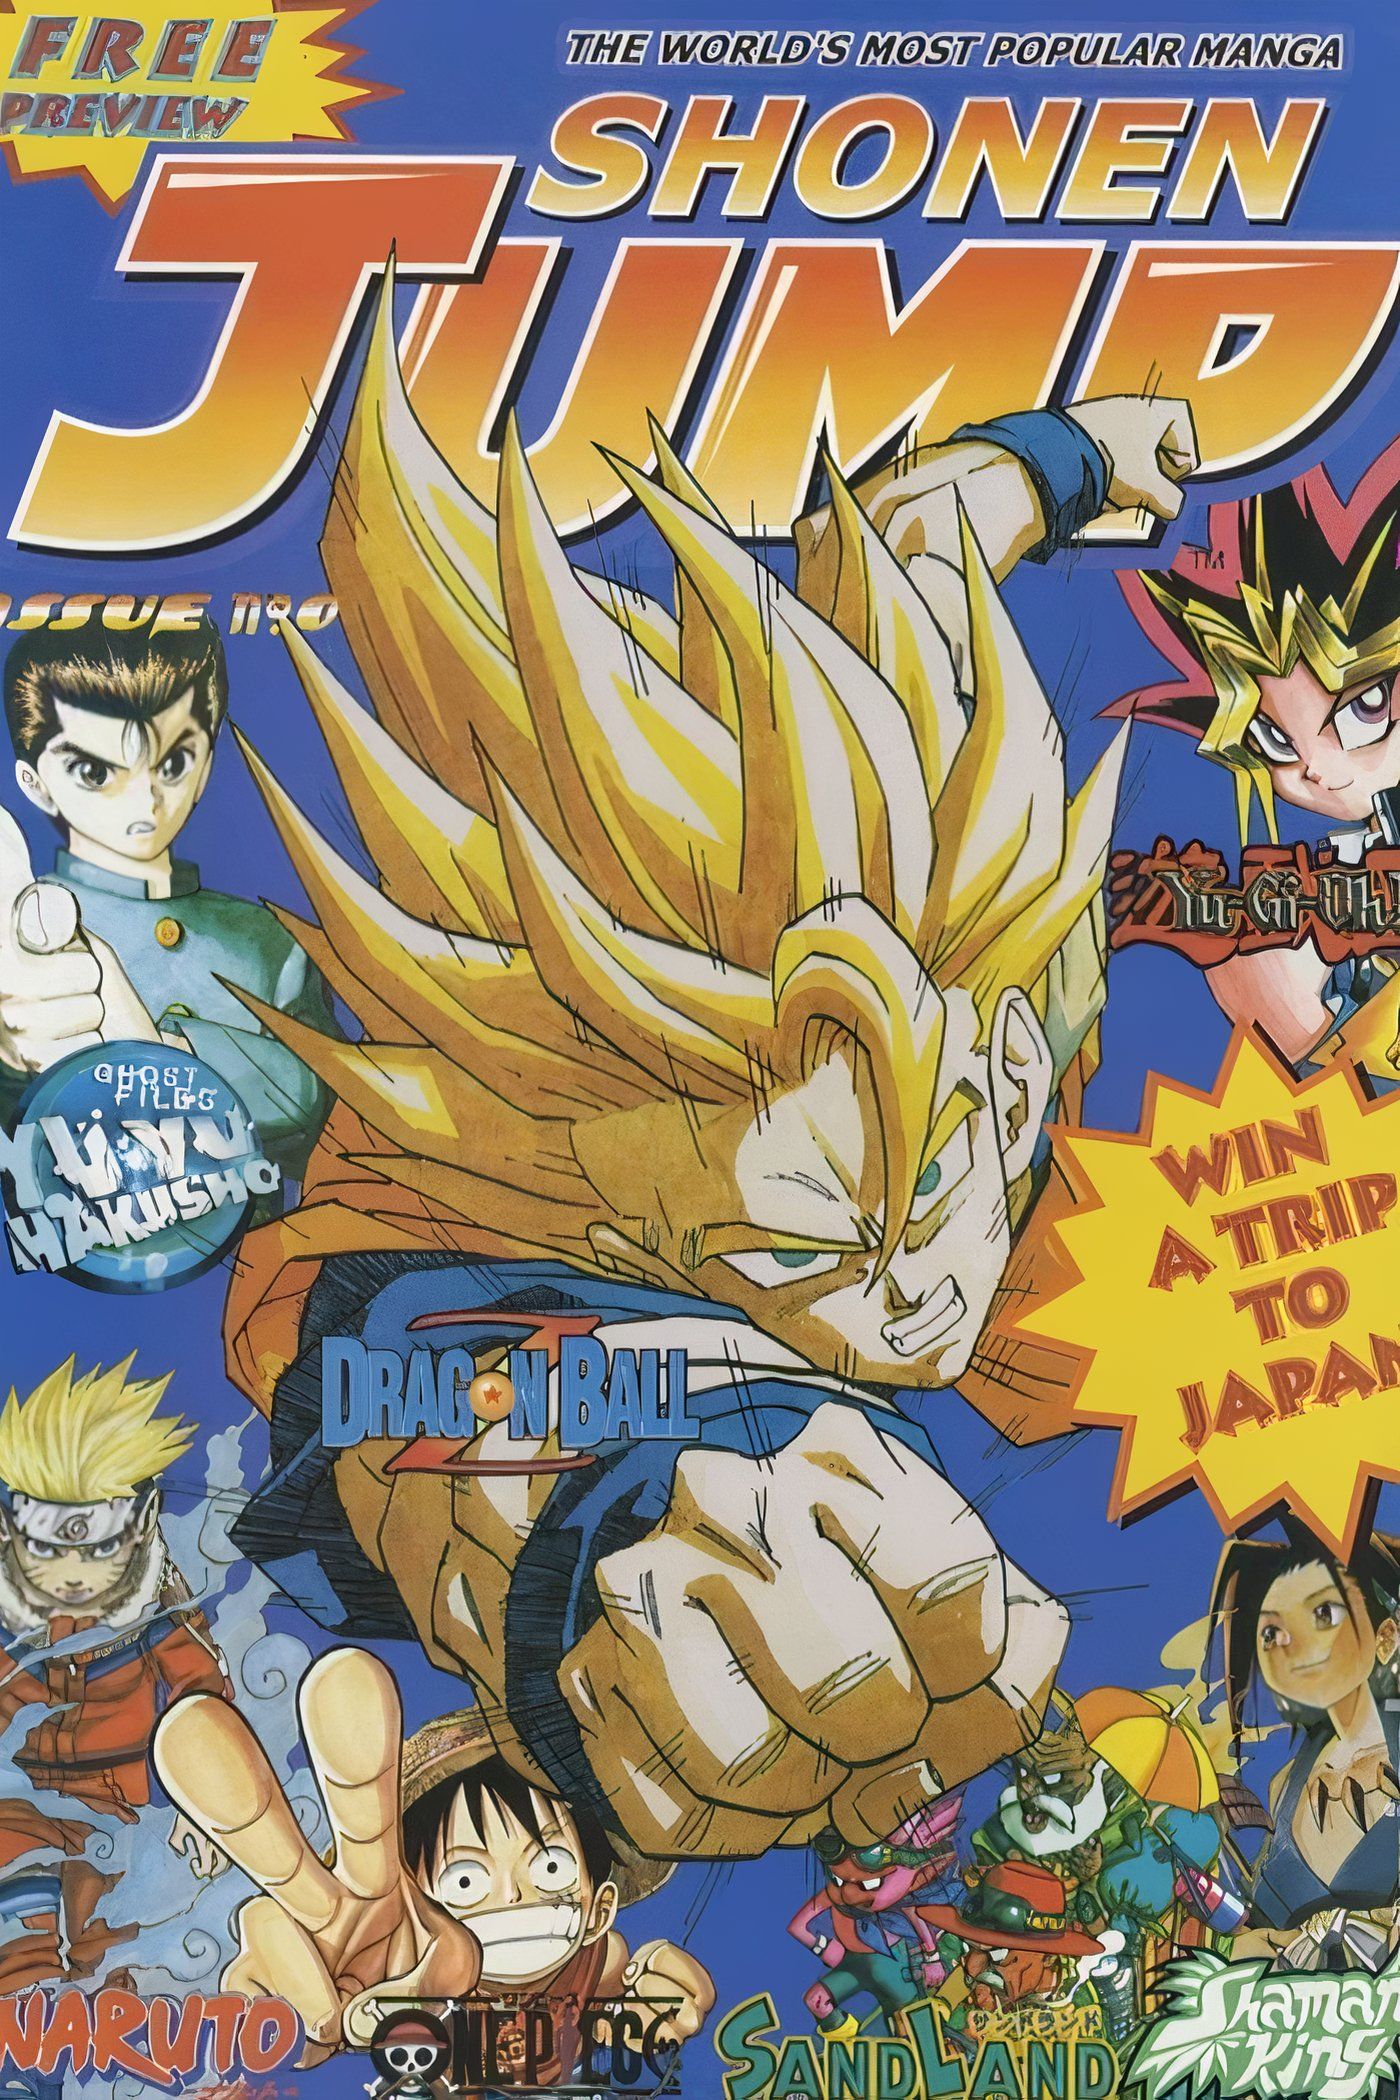 American Weekly Shonen Jump 0 featuring Goku, Luffy, Naruto, Yugi Muto, and more